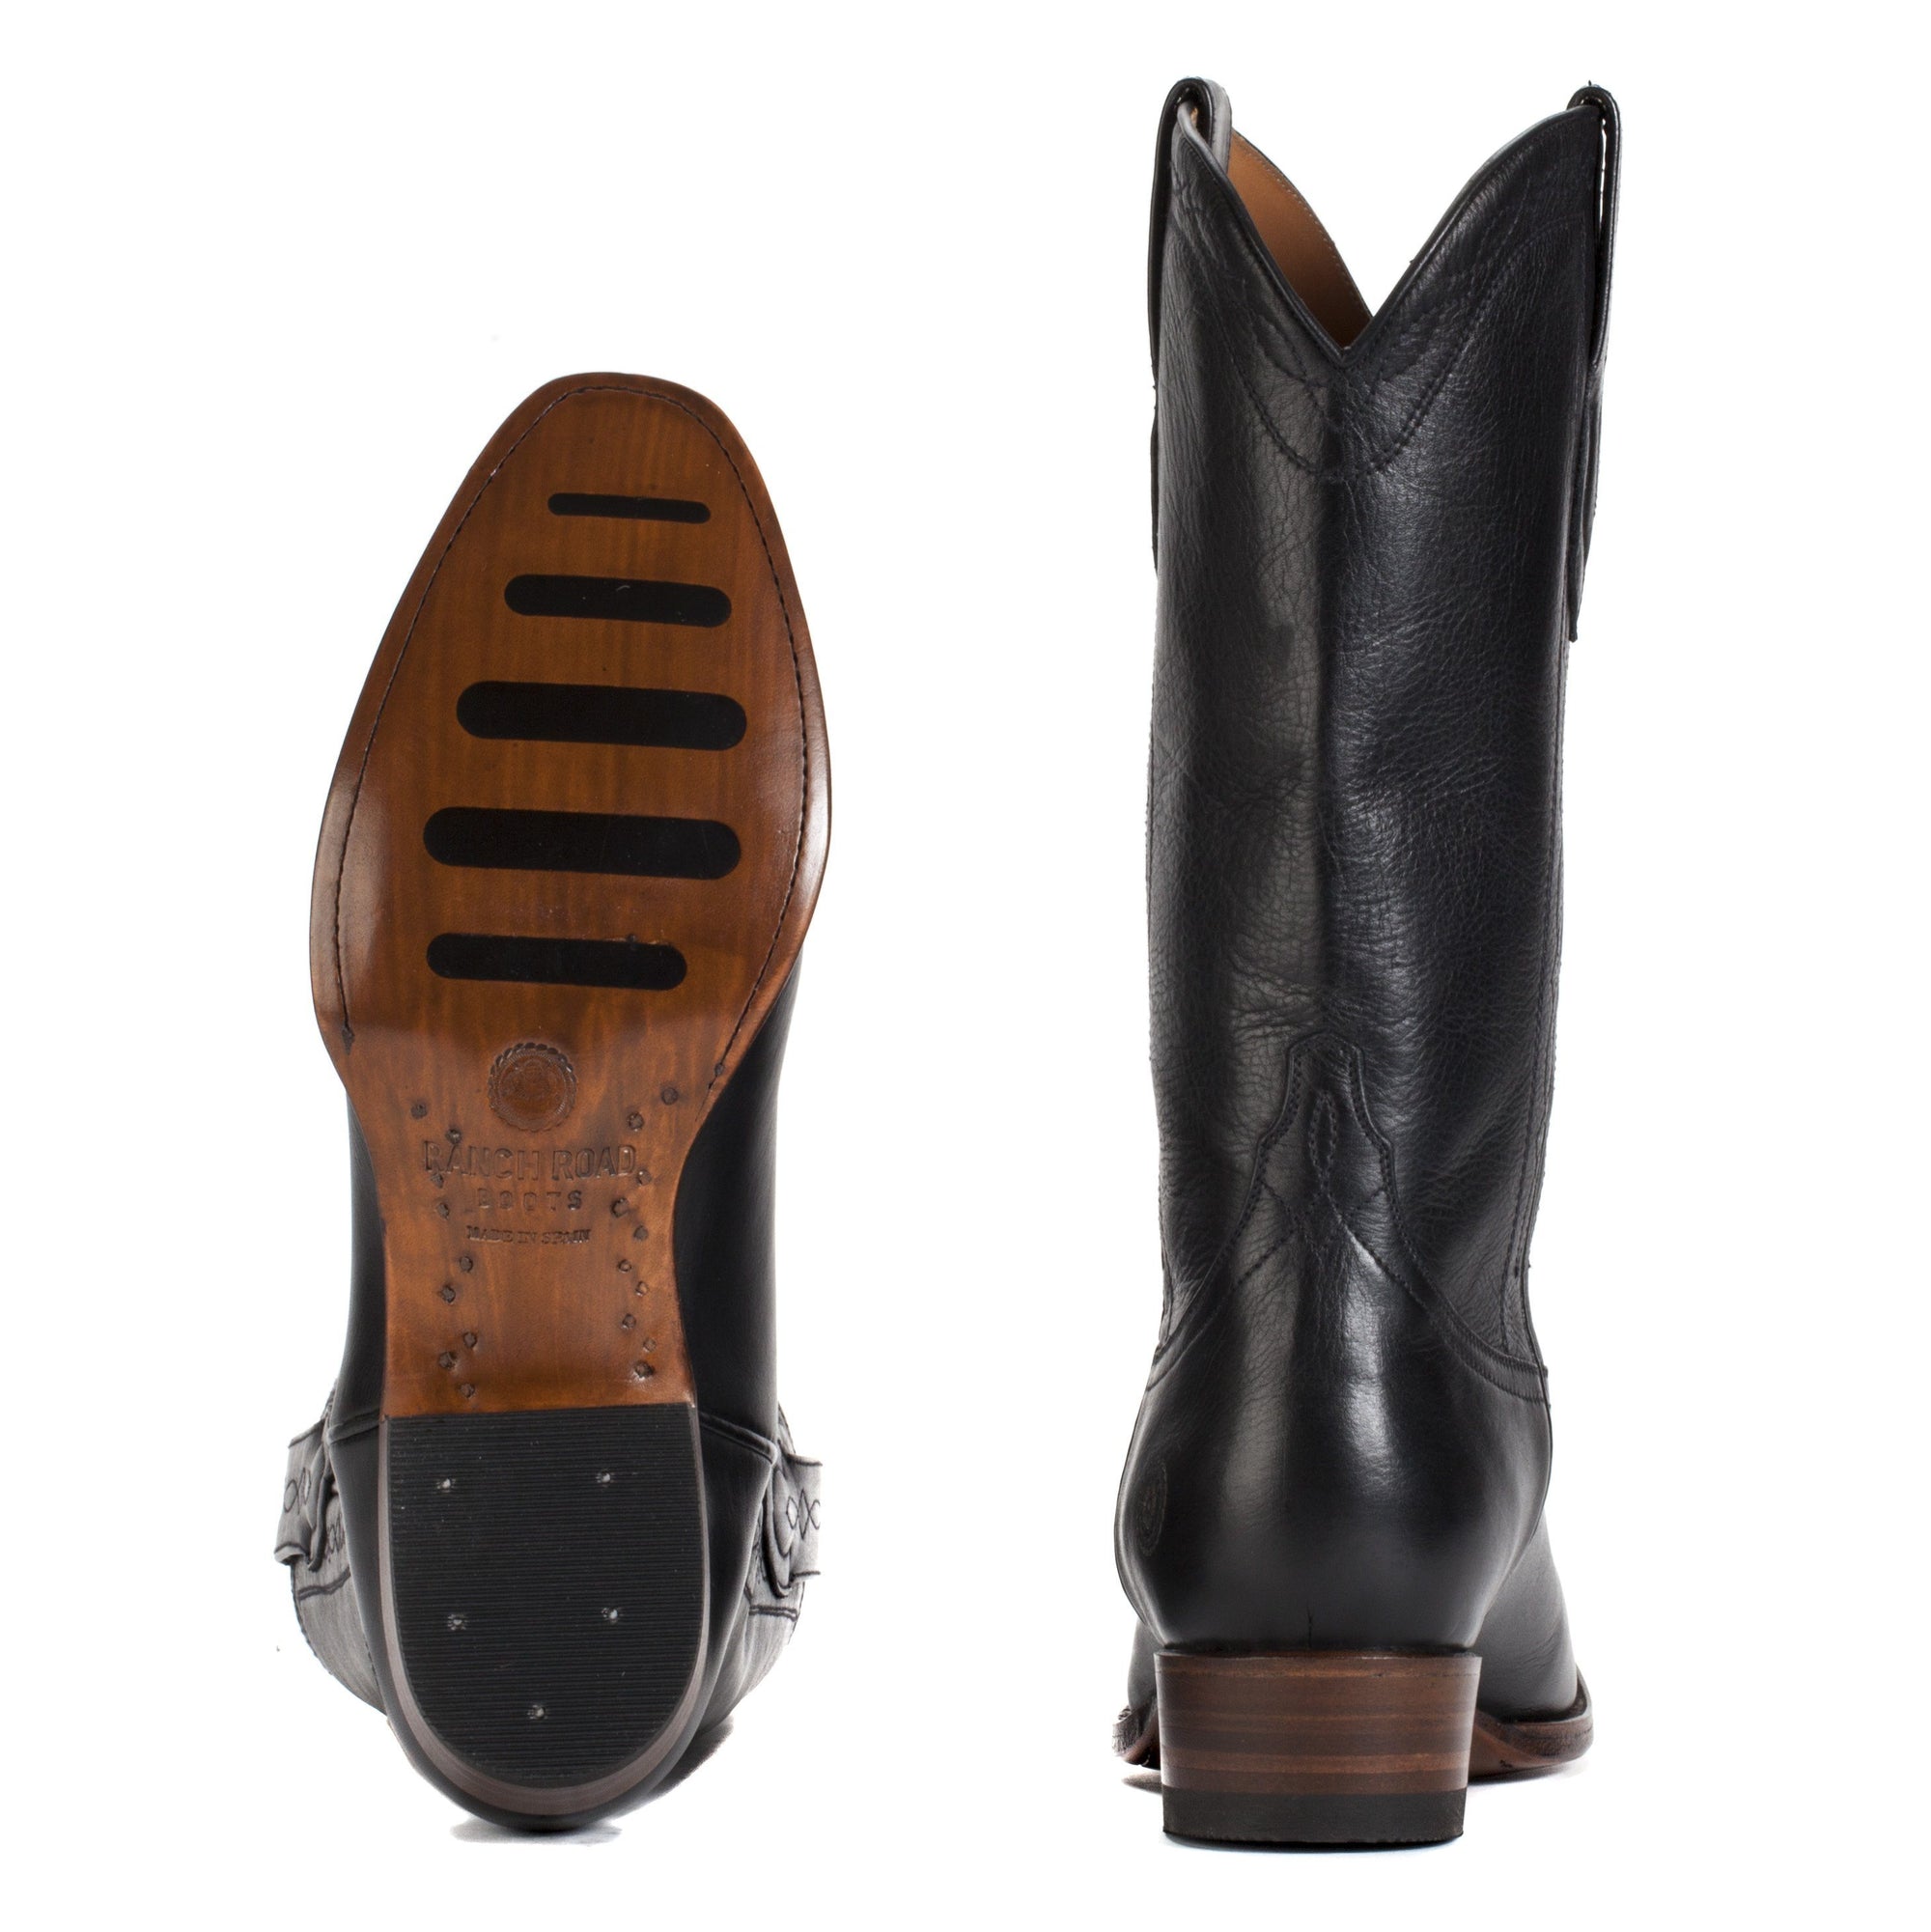 usmc cowboy boots